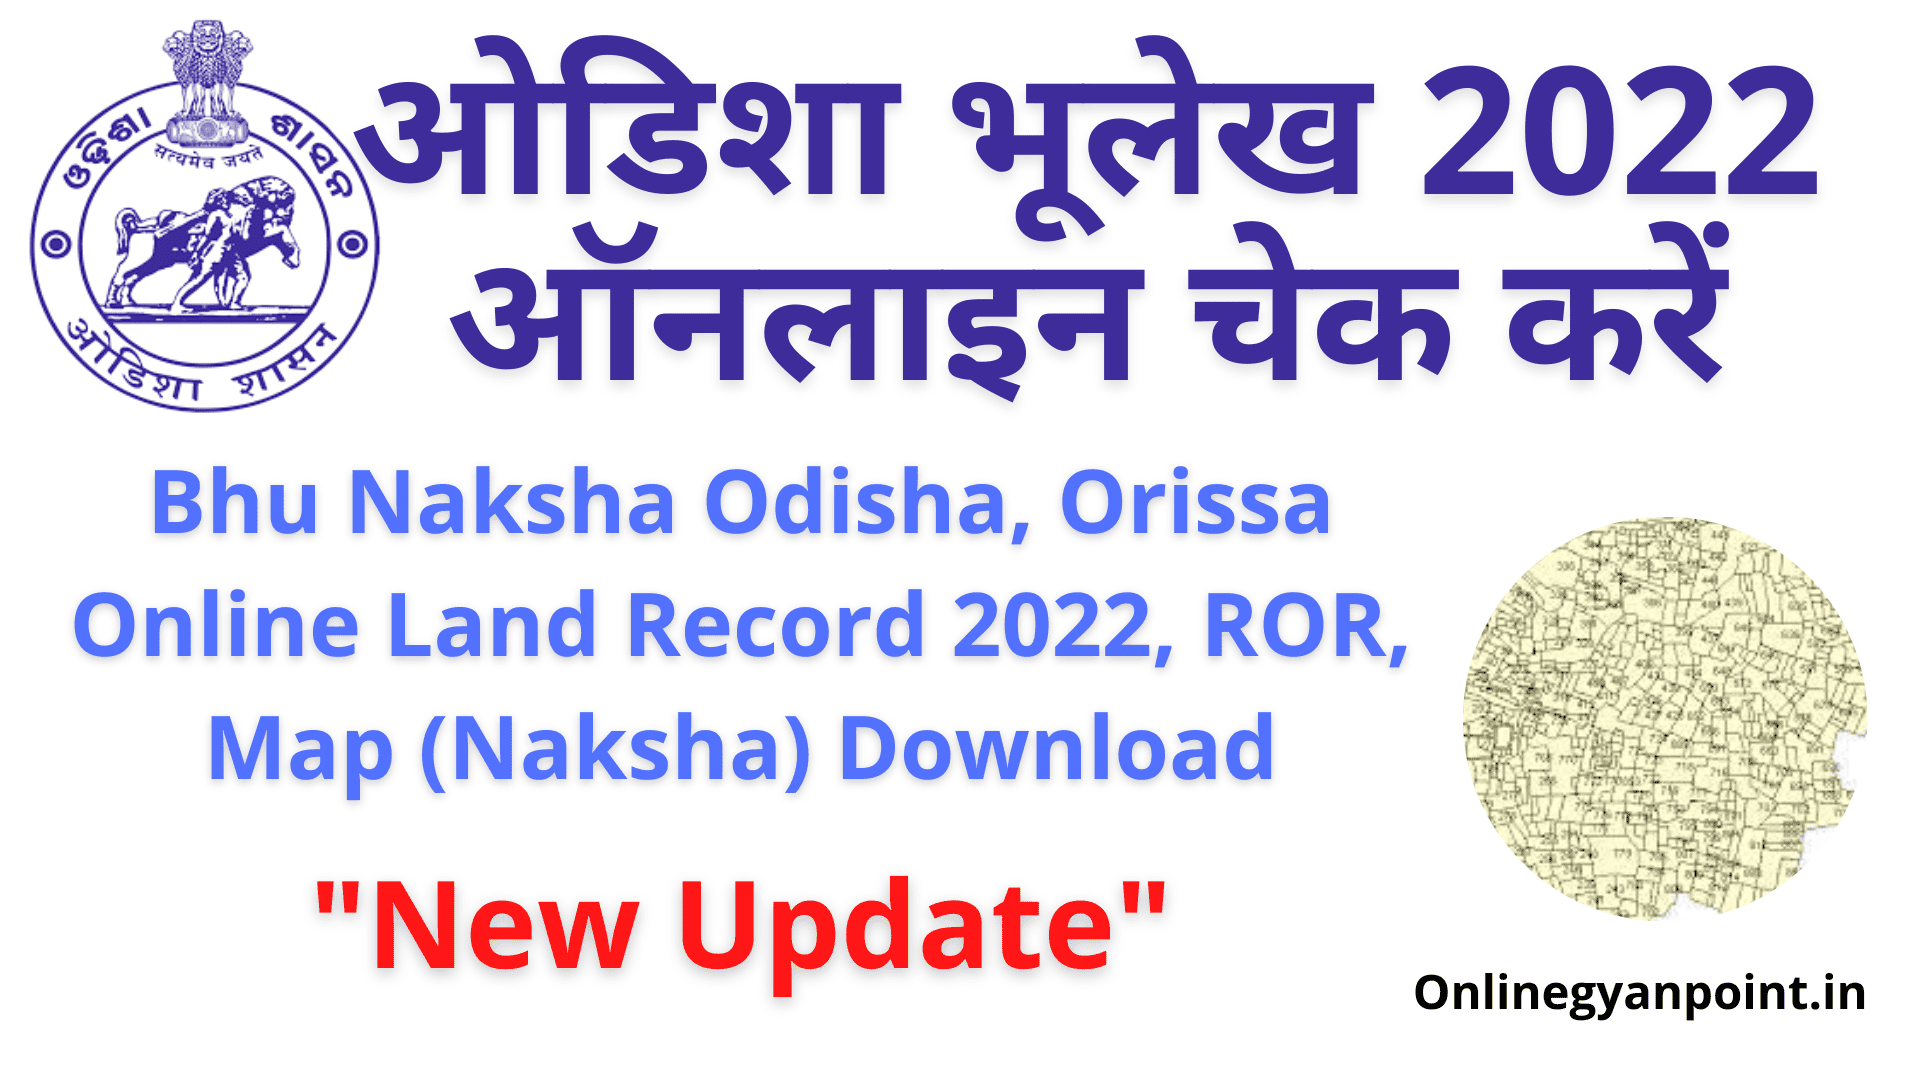 Orissa Bhu Naksha Map, Online ROR, Land Record, Naksha Download